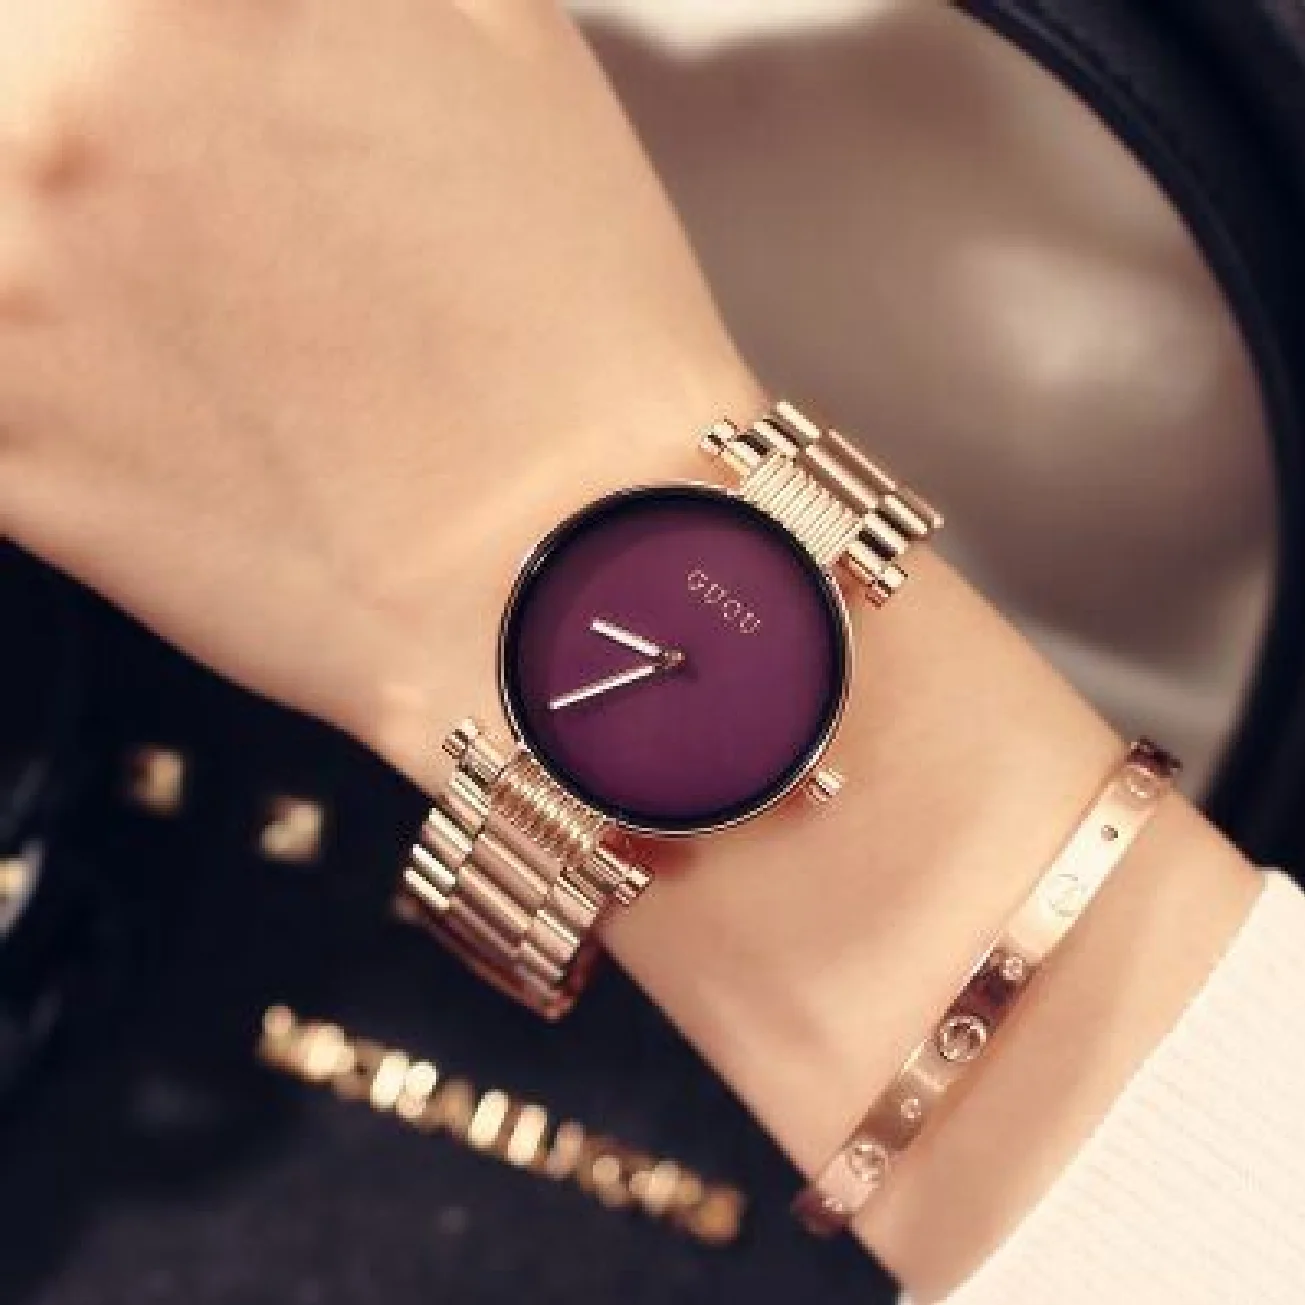 Guou Fashion Top 2019 Brand Simple Luxury Rose Gold Clocks Women Watches Stainless Steel Watch Gift Relogio Feminino Reloj Mujer enlarge